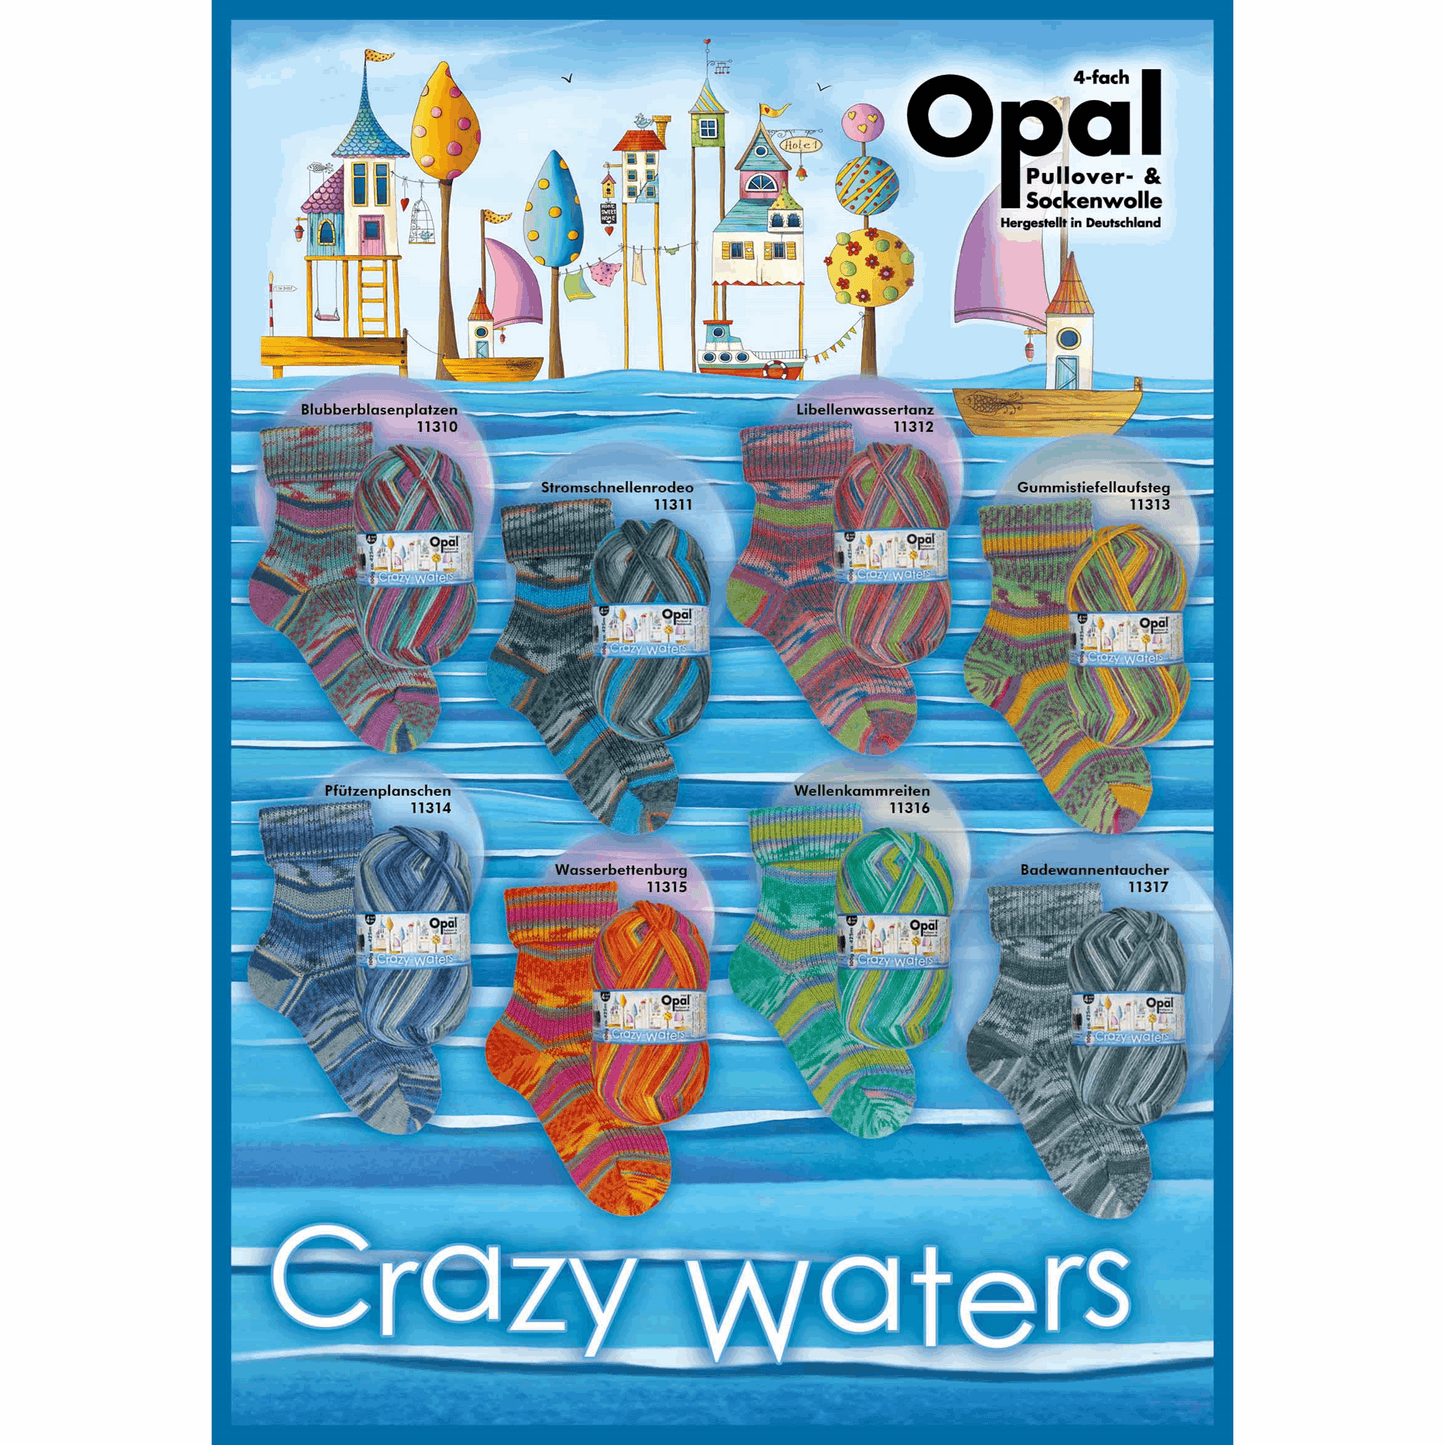 Opal Grazy Waters 4fädig 100g, 97755, Farbe blubberblasenplatzer 1310